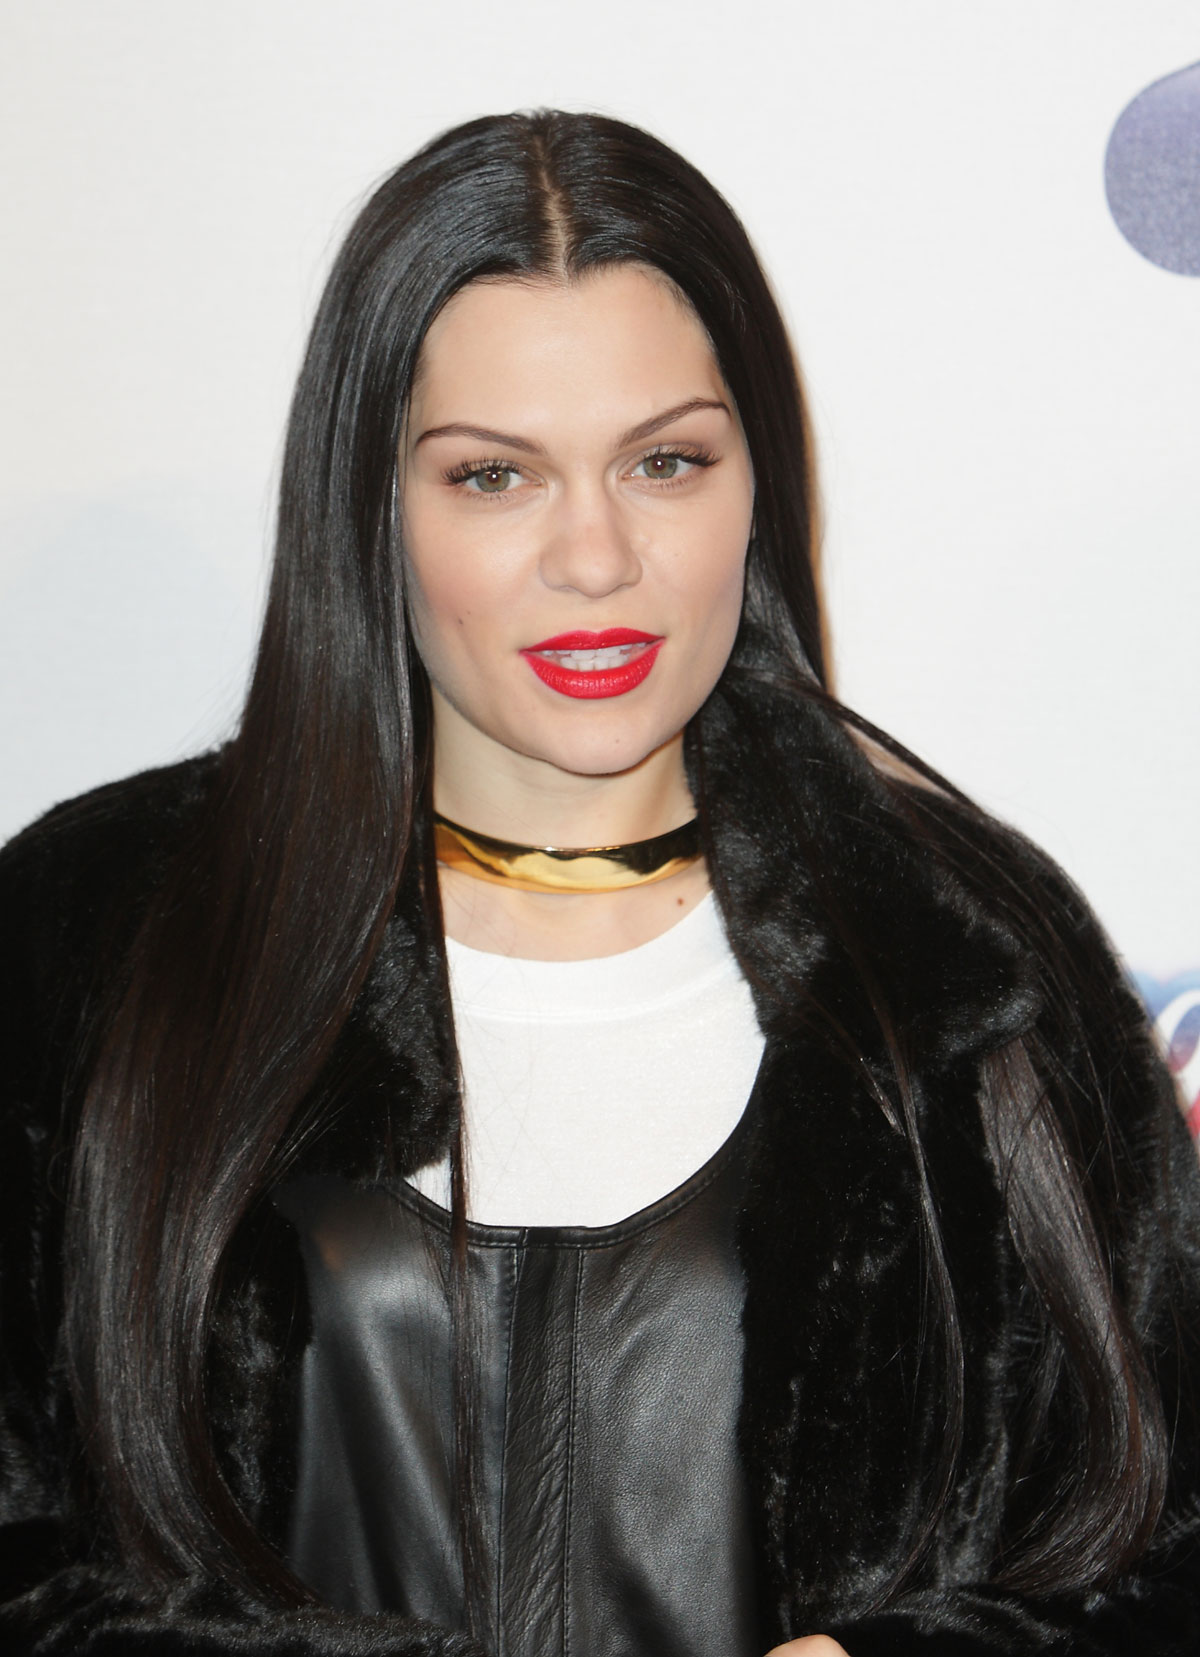 Jessie J attends Jingle Bell Ball day 2